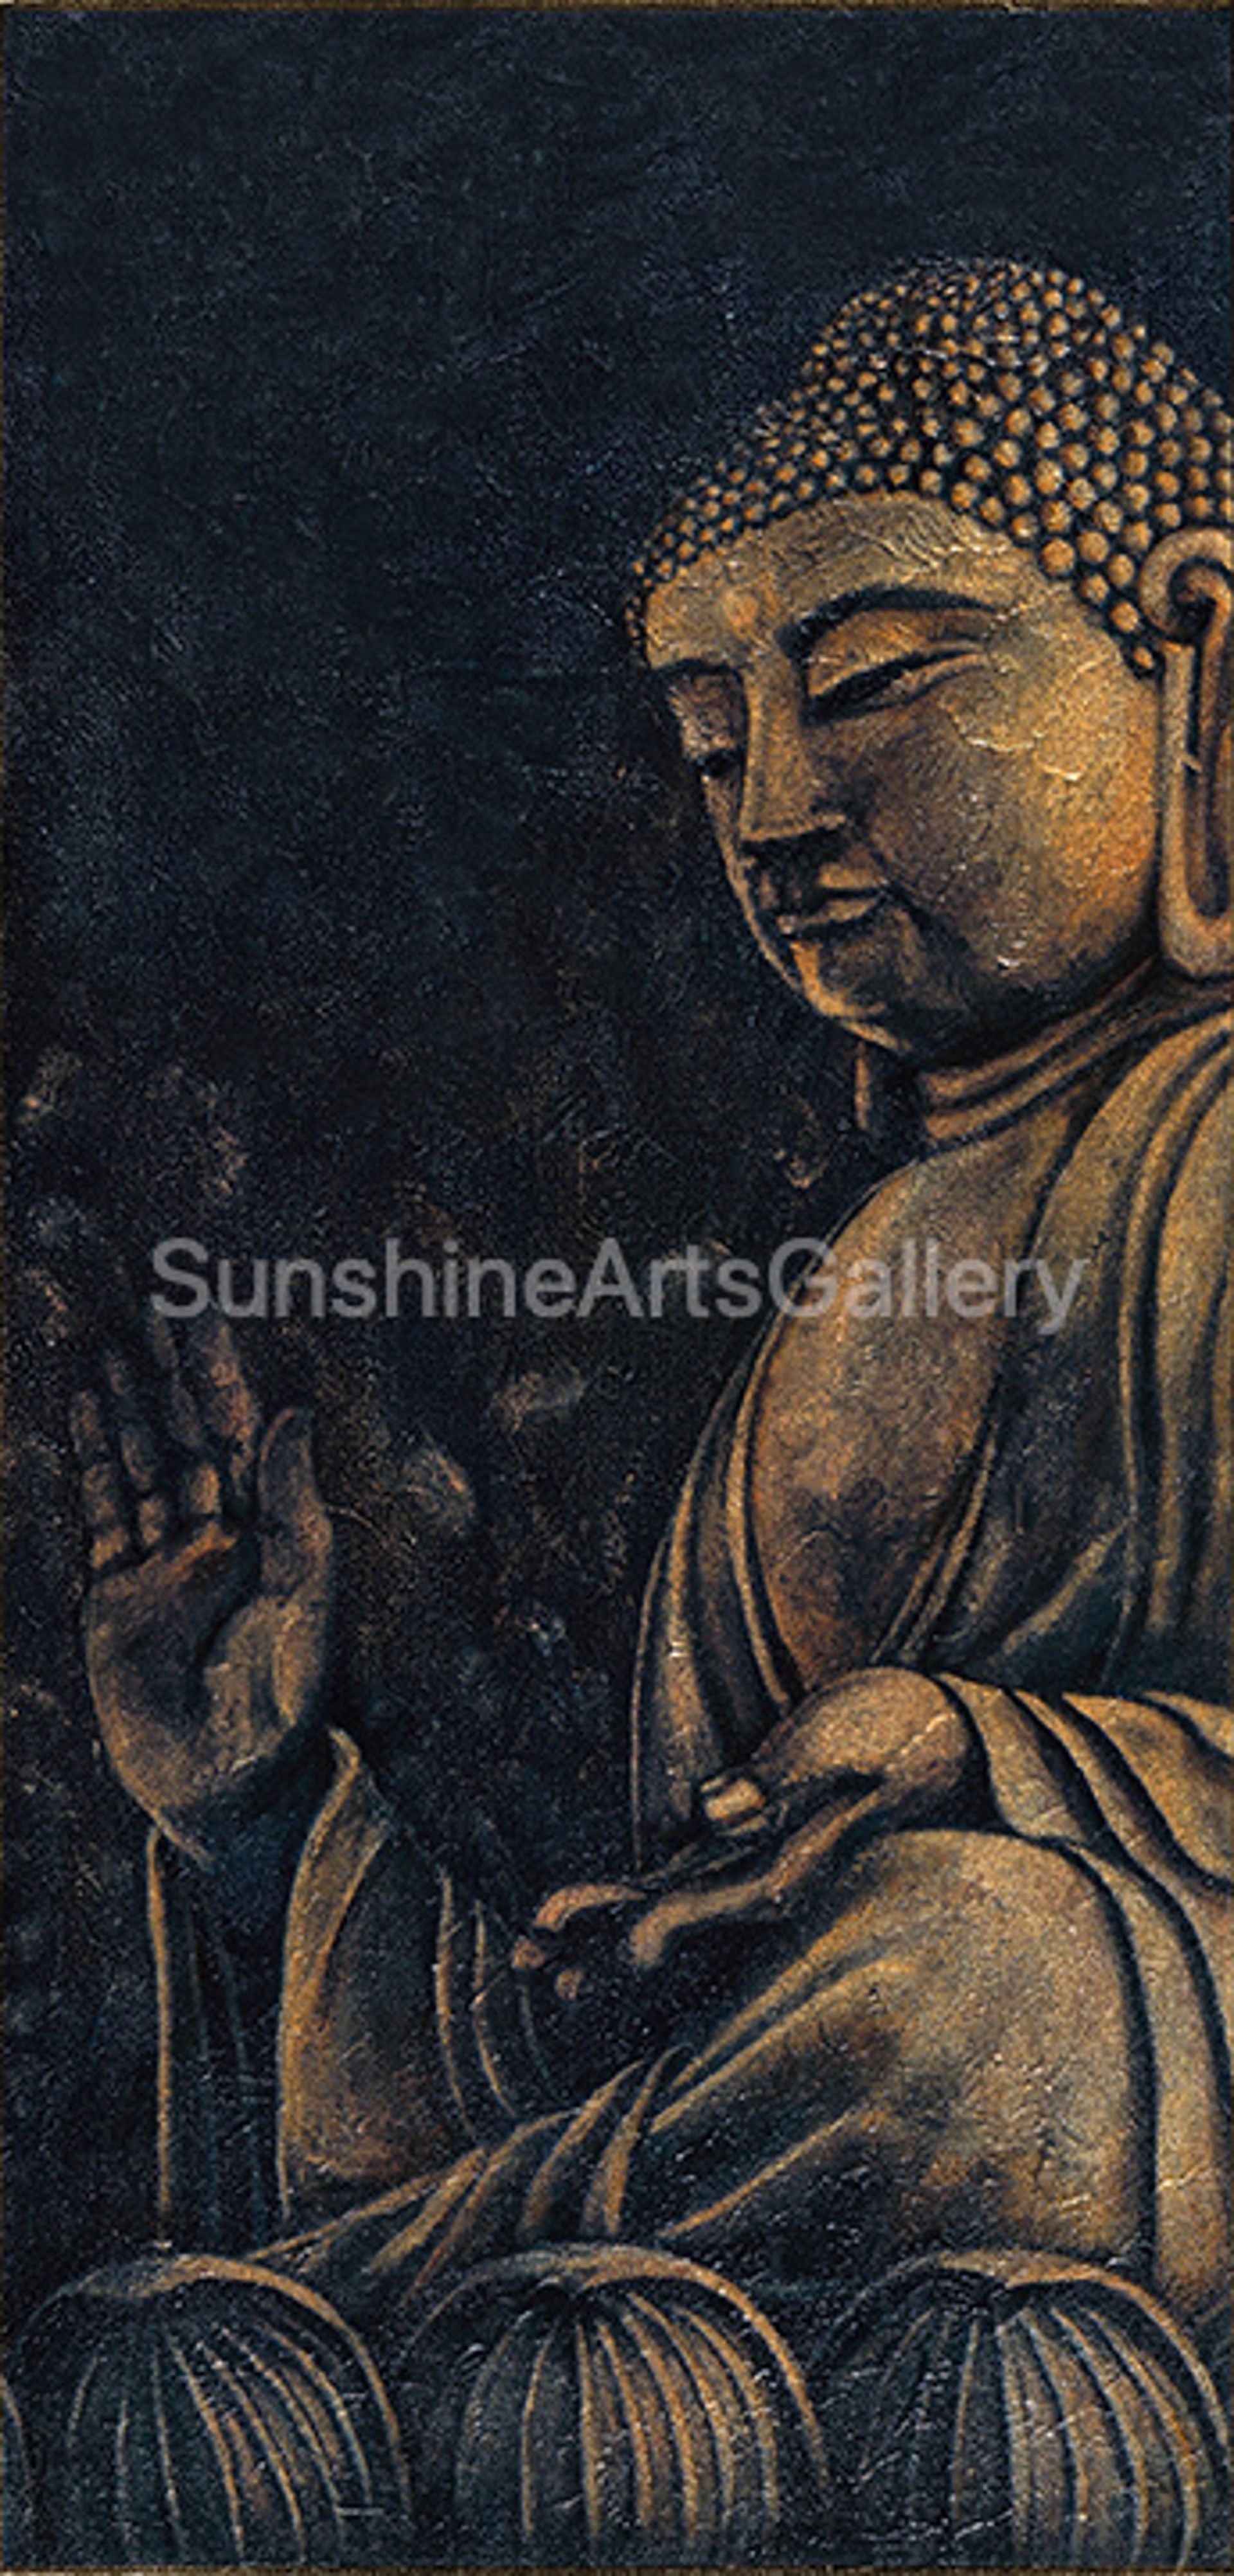 Touch of Buddha by Pati O'Neal